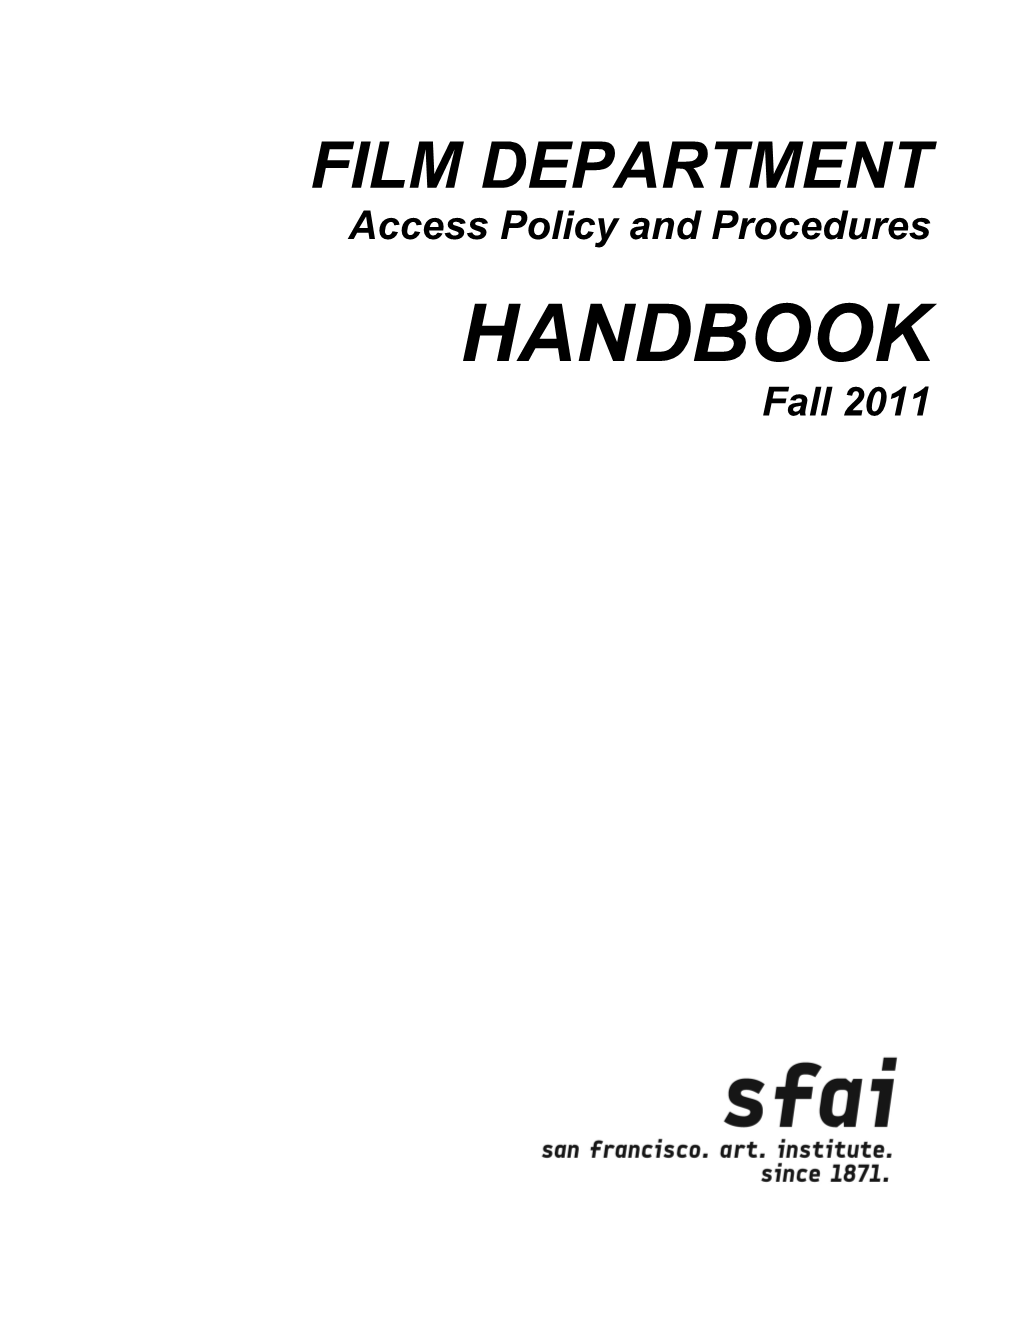 SFAI Handbook